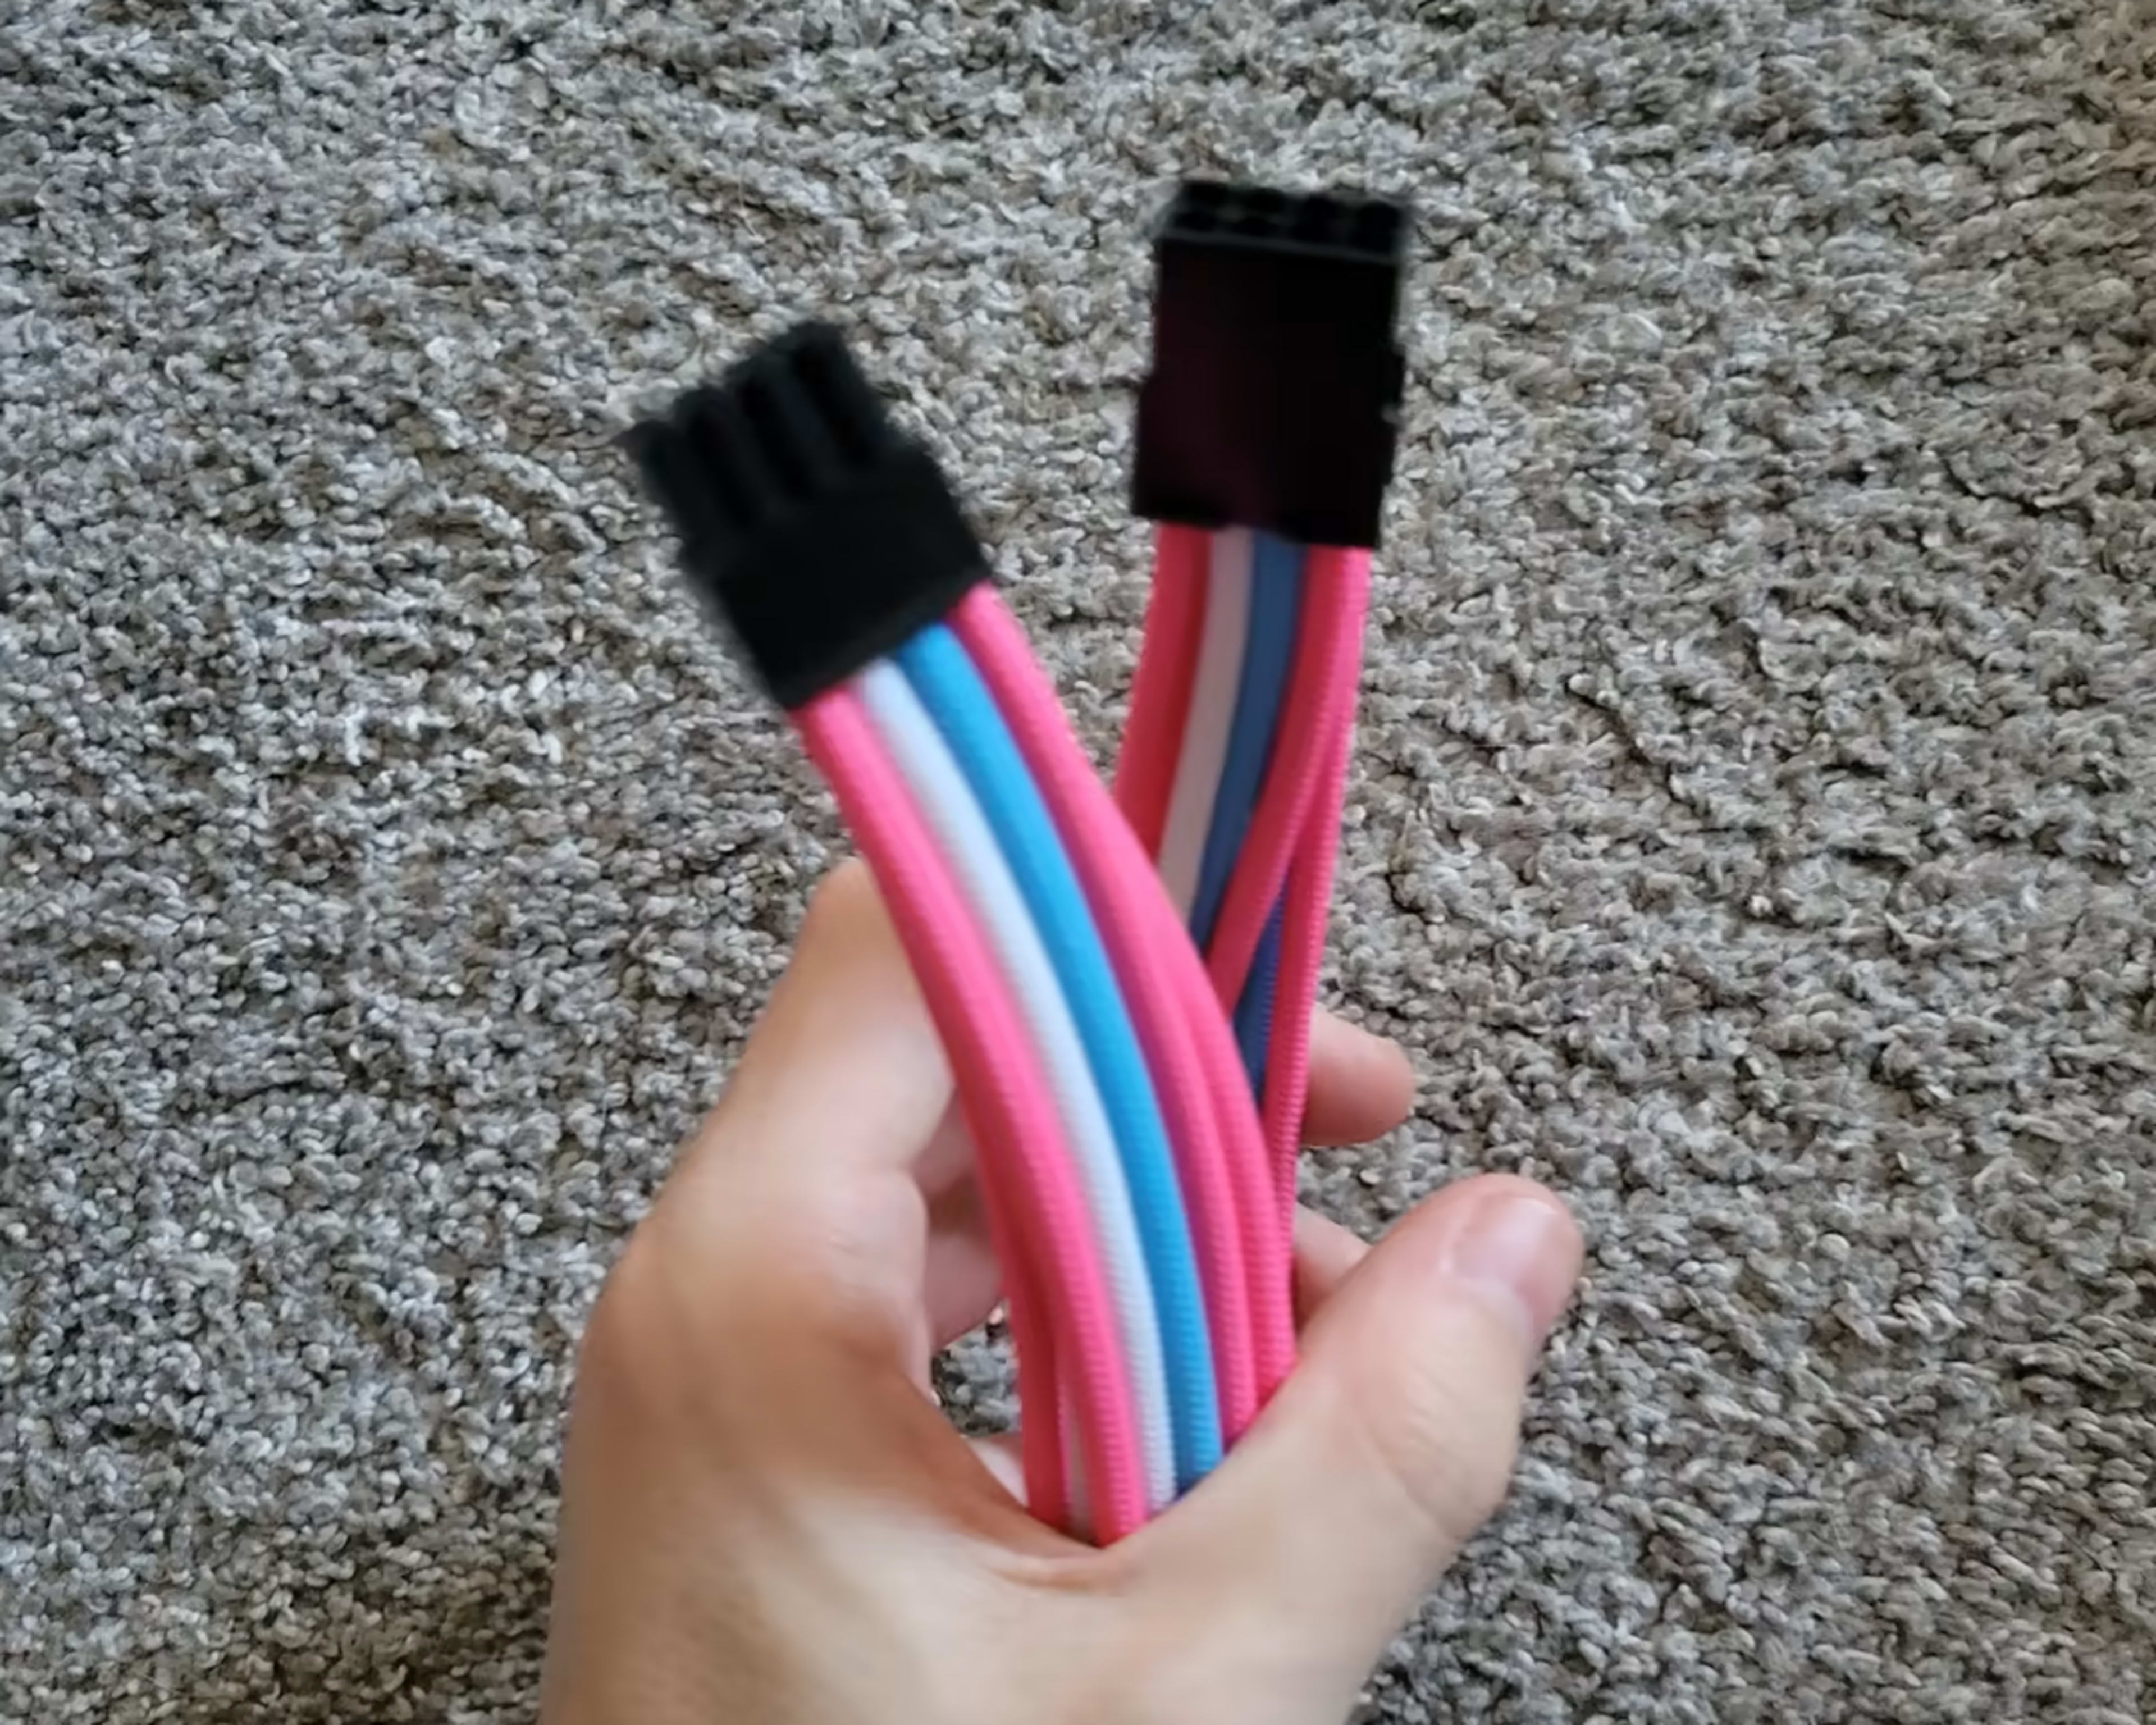 Sleeved 8 pin gpu cable